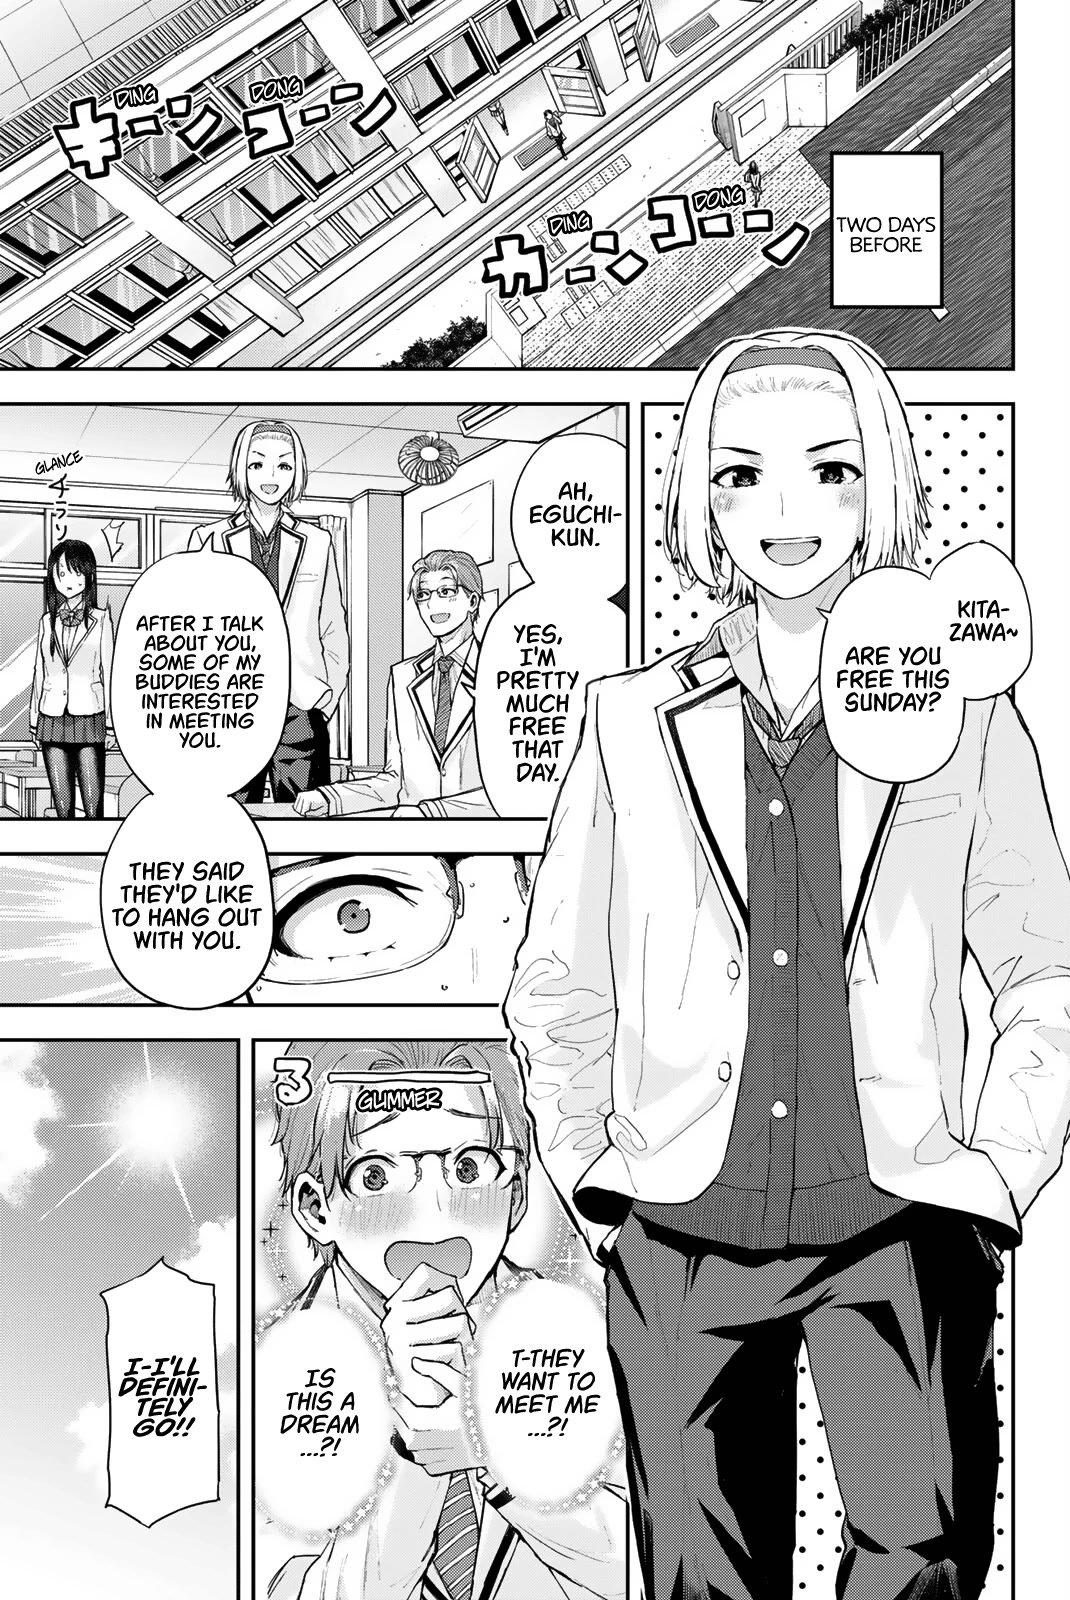 Kitazawa-kun Is in A class - chapter 9 - #3